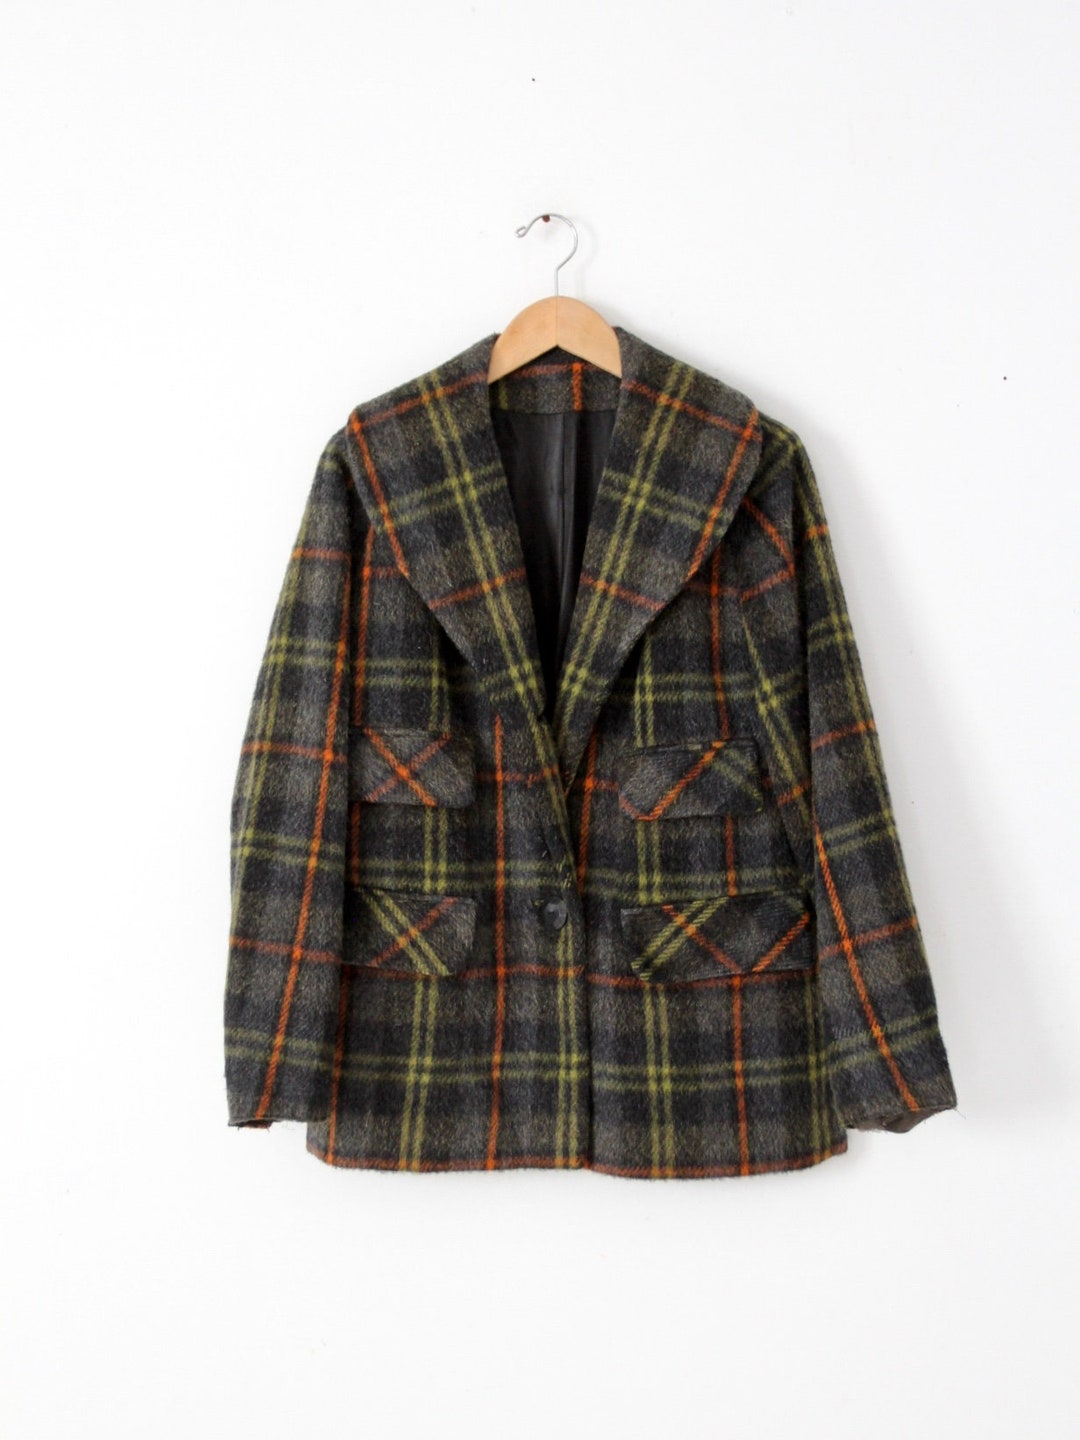 Vintage 40s Wool Coat, Plaid Single Button Jacket - Etsy